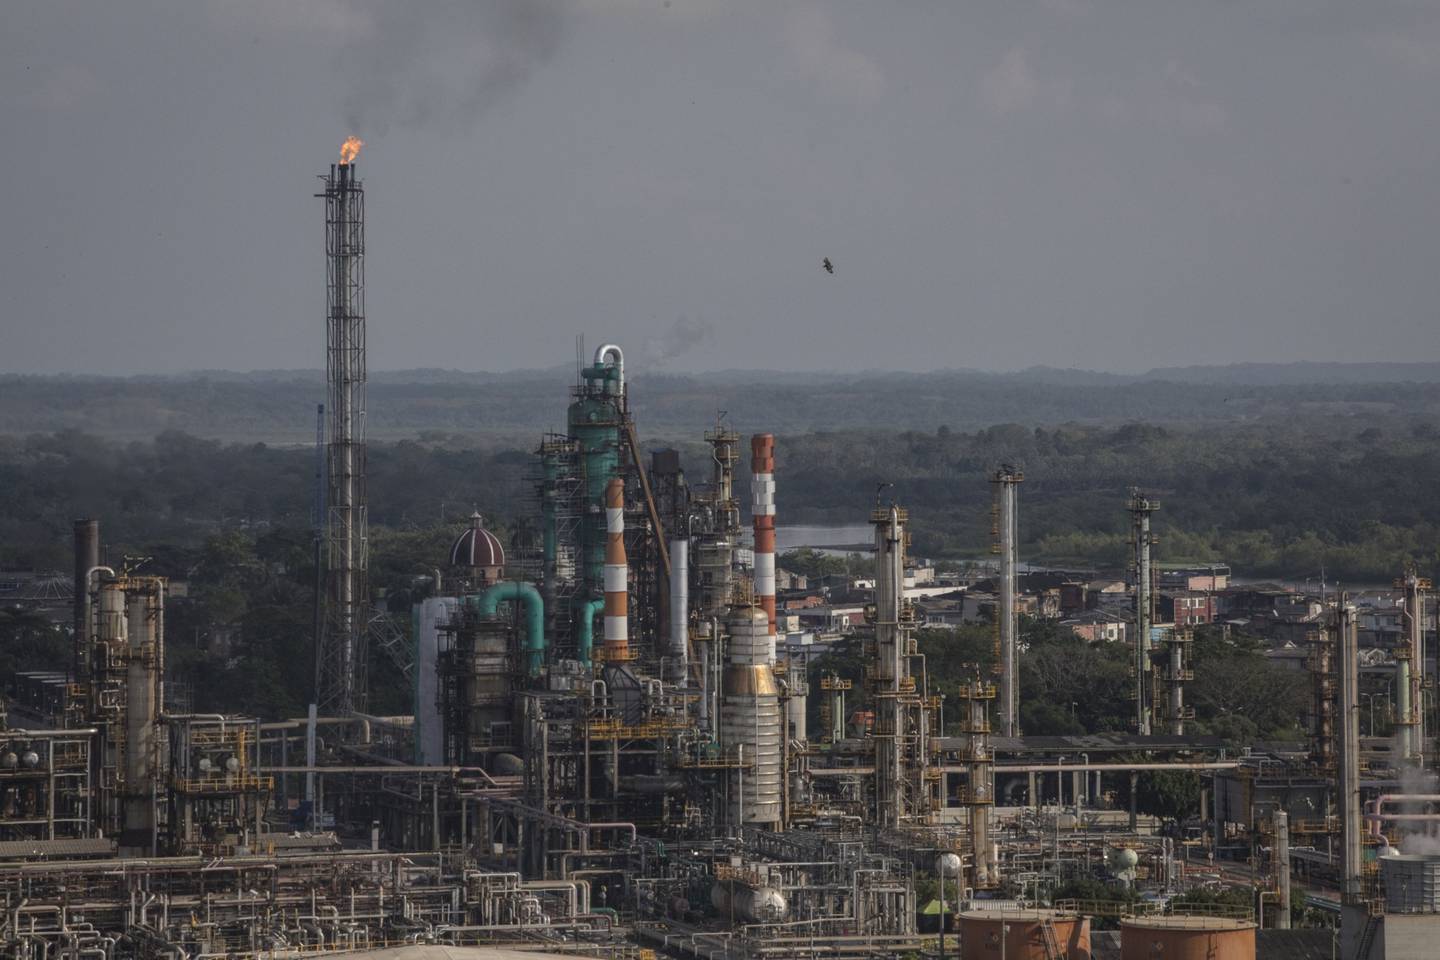 La refinería de Ecopetrol Barrancabermeja en Barrancabermeja, Colombia, el martes 15 de febrero de 2022.dfd